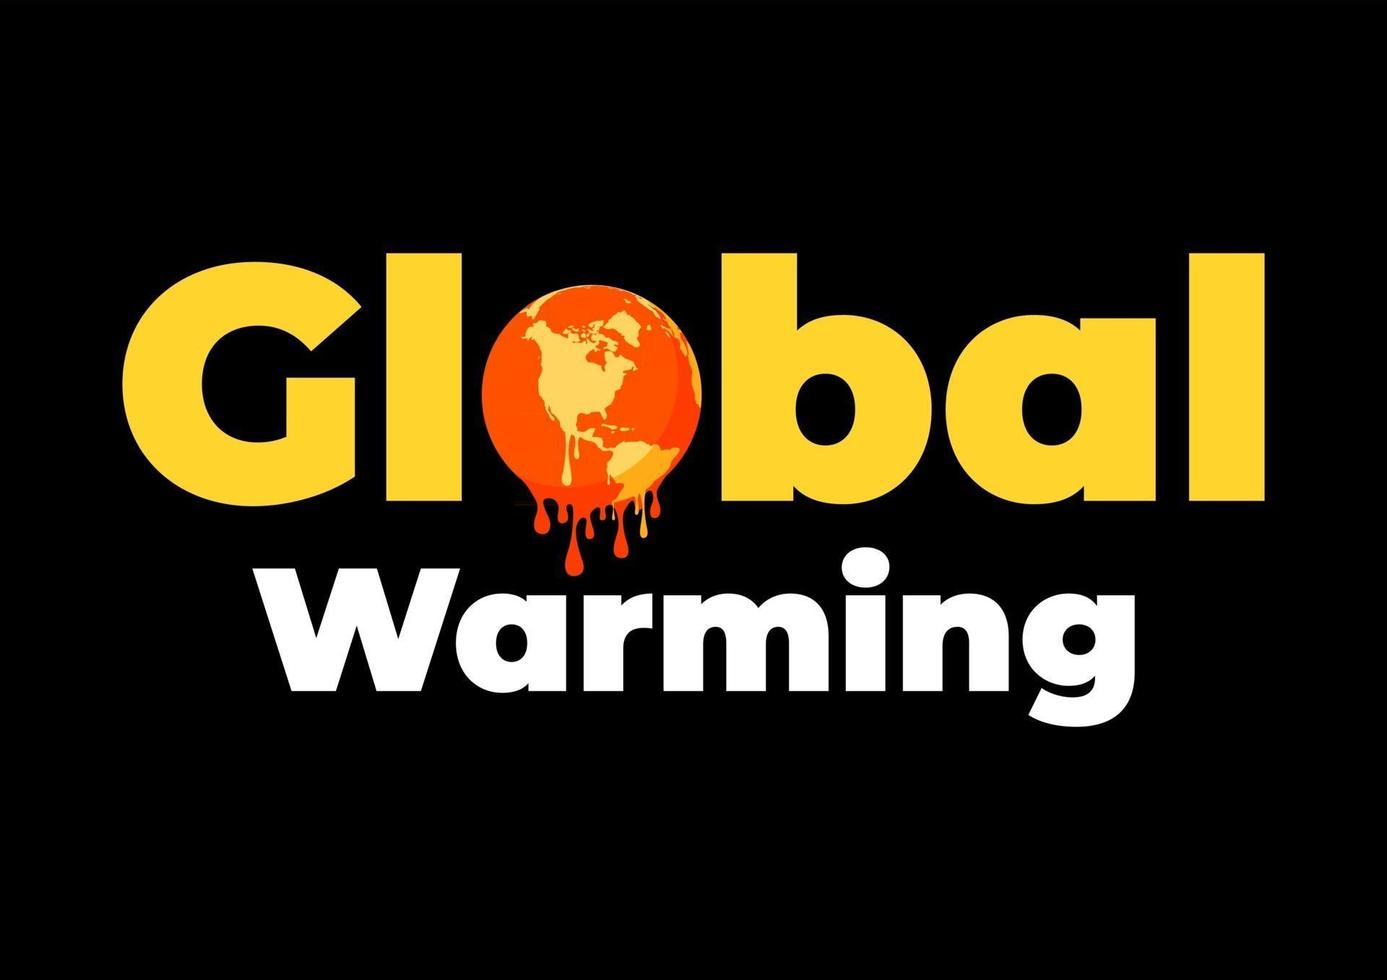 Global warming logo Global warming Earth globe melting vector